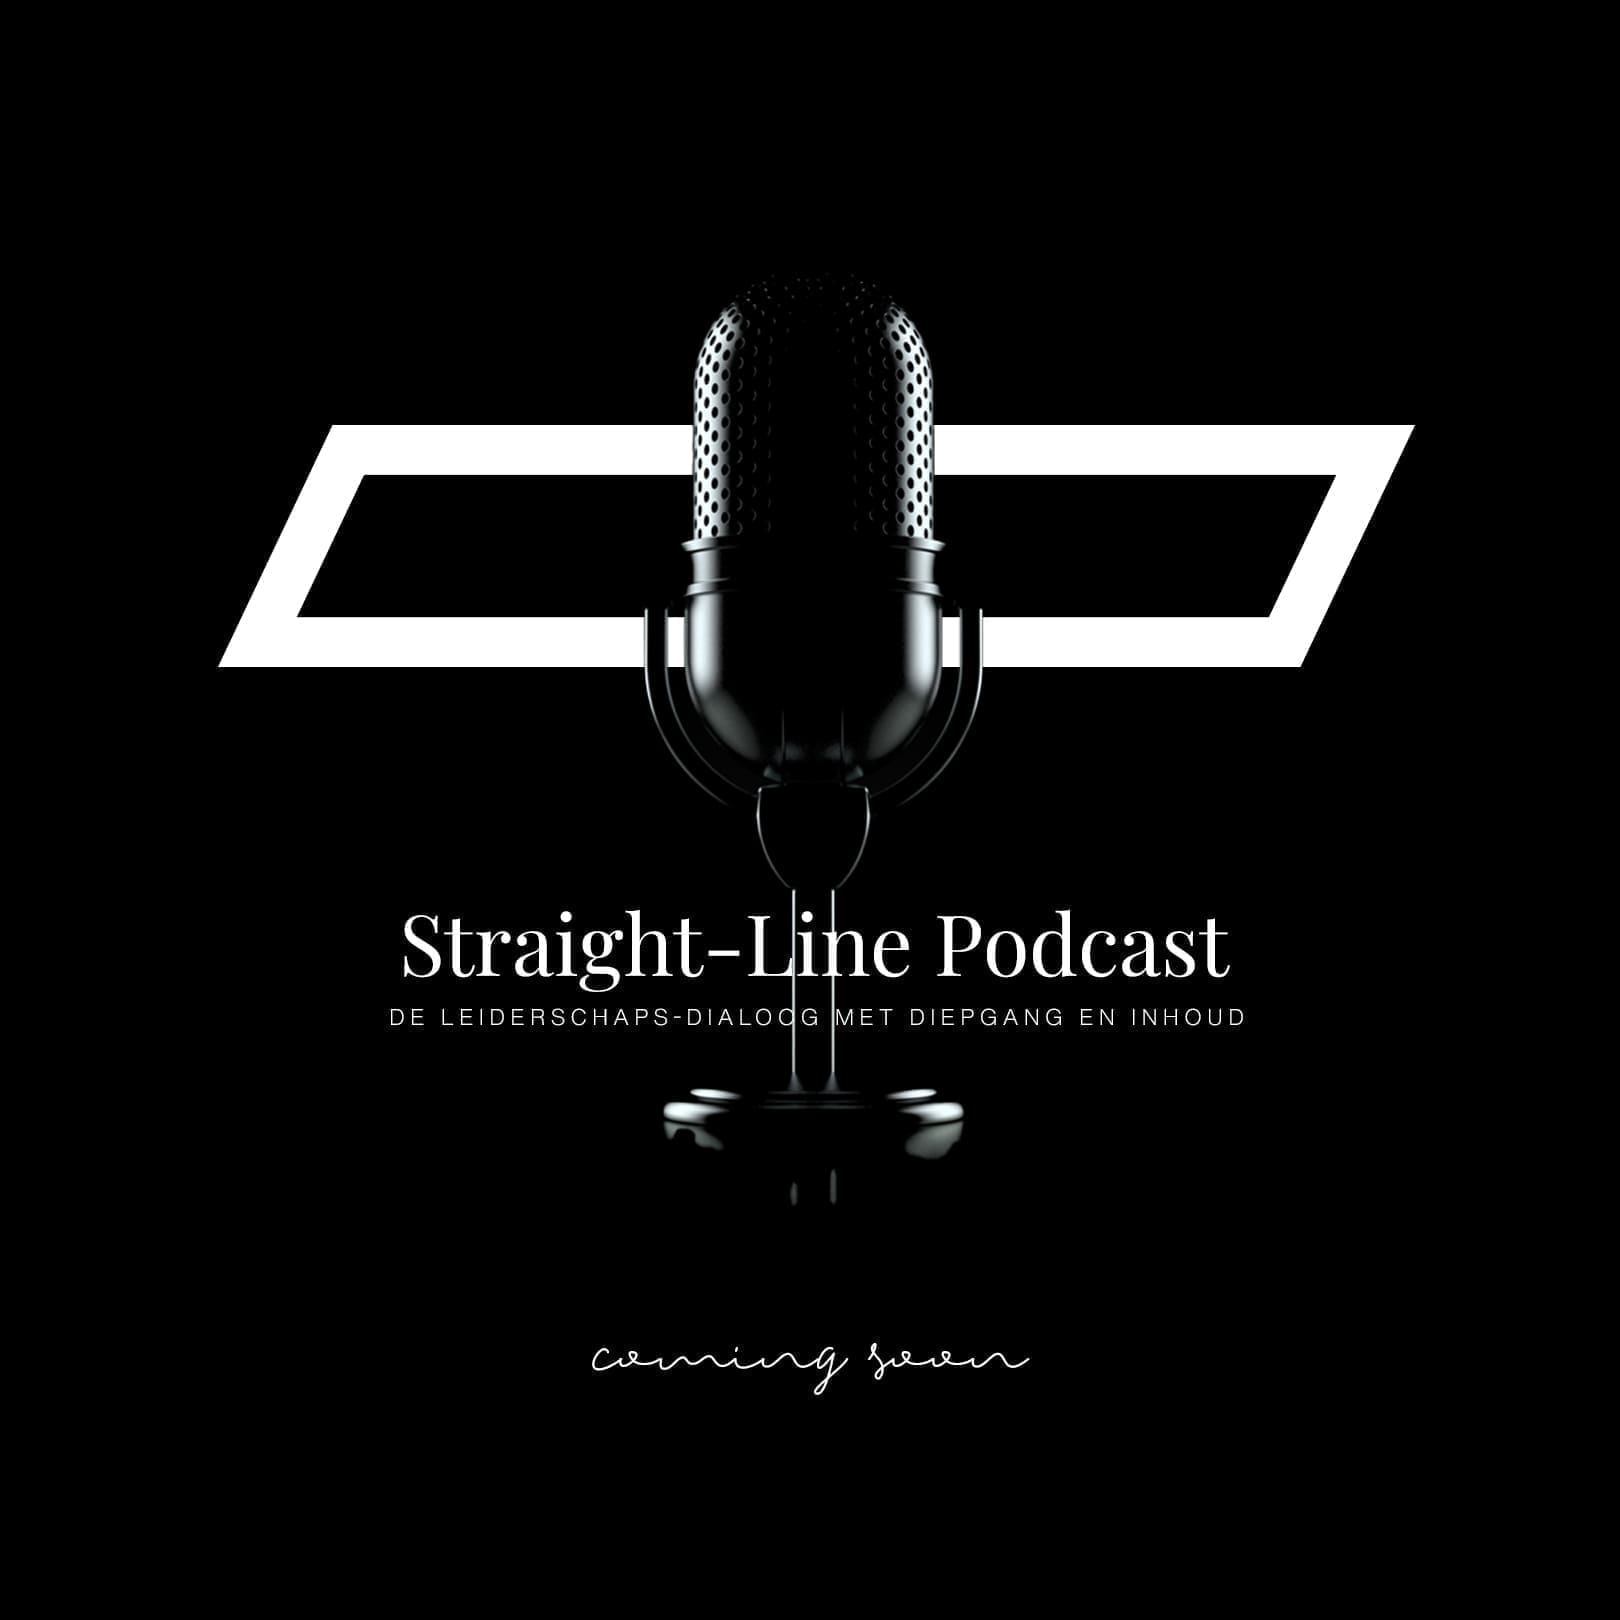 Straight-Line Podcast